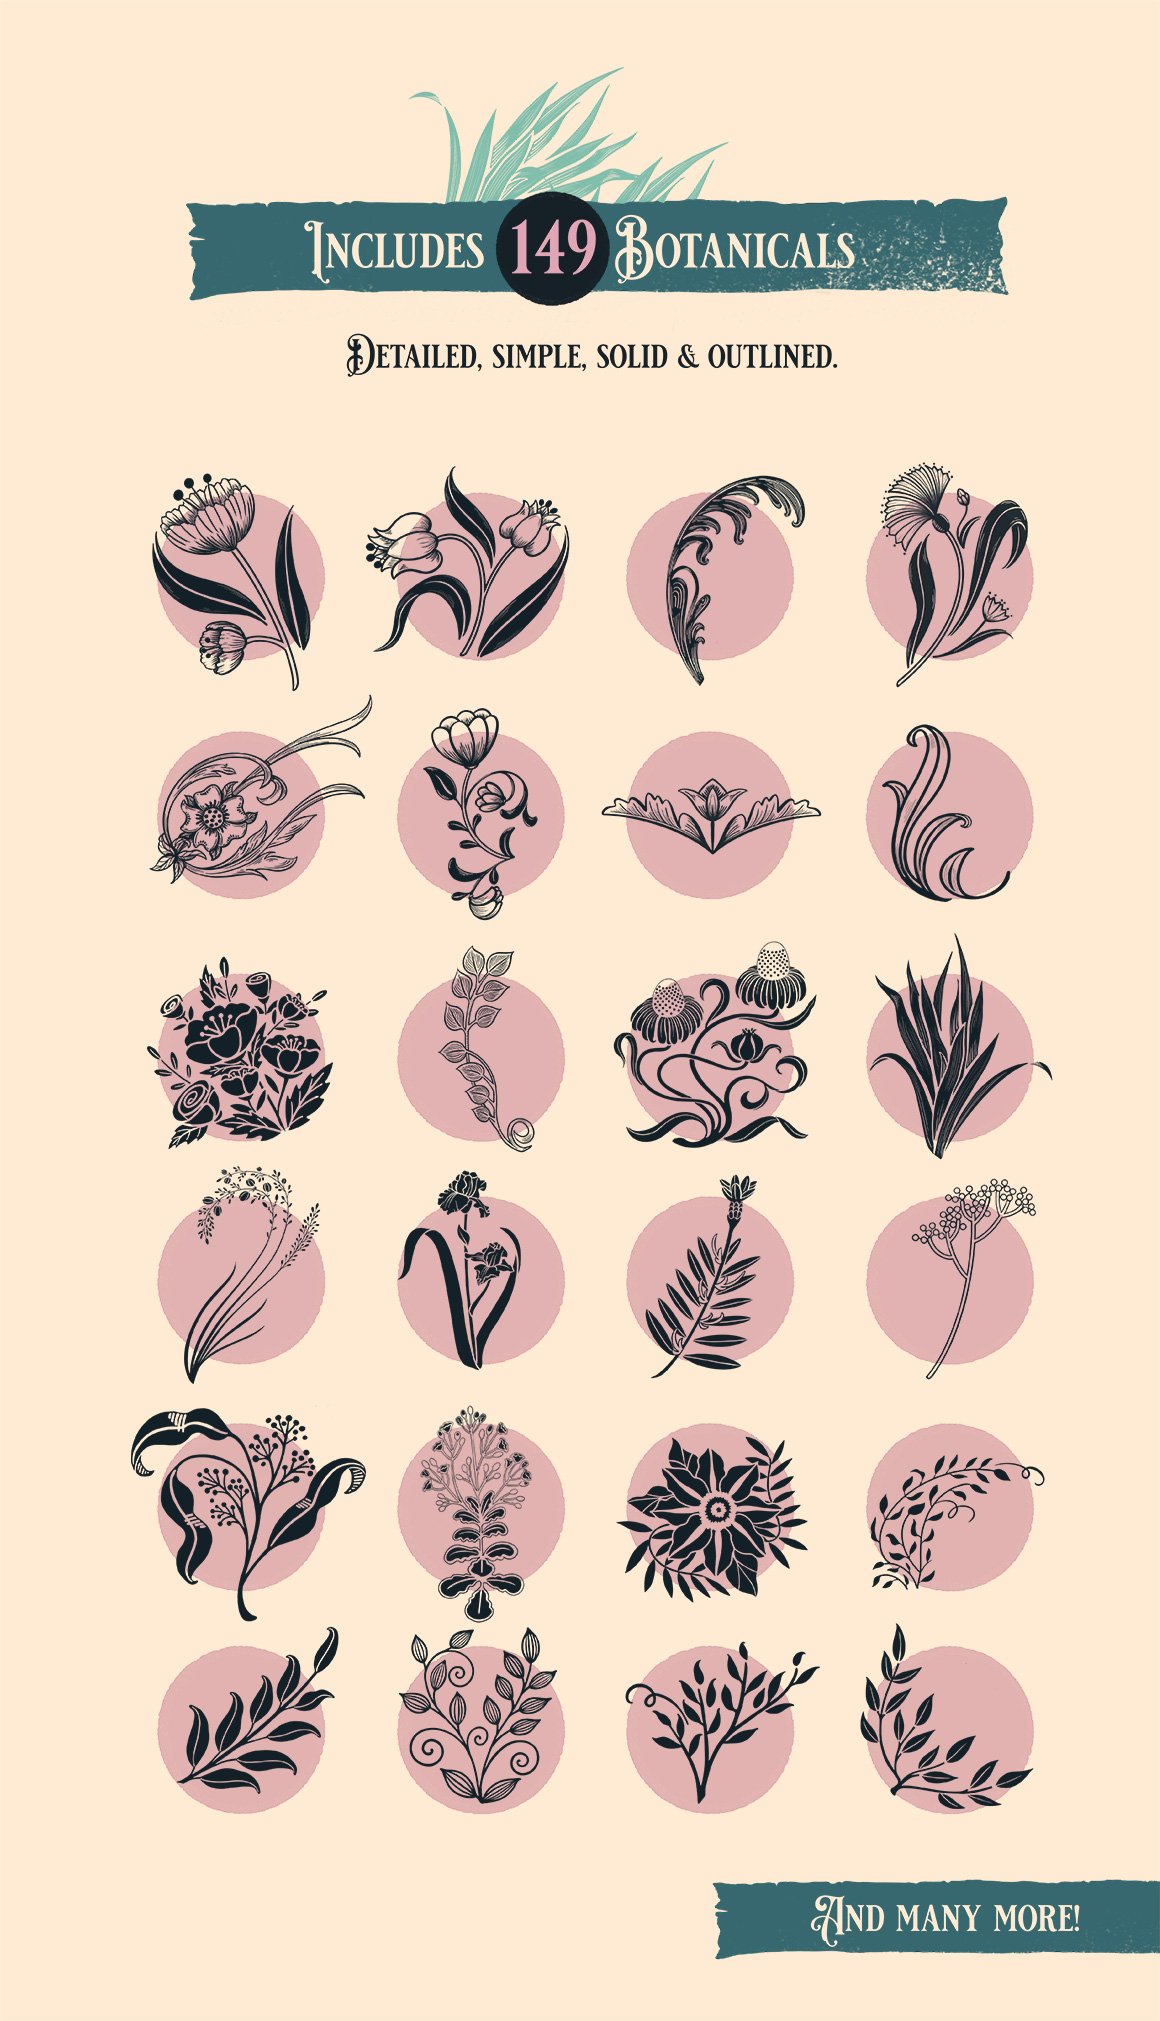 Procreate Botanical Stamp Pack